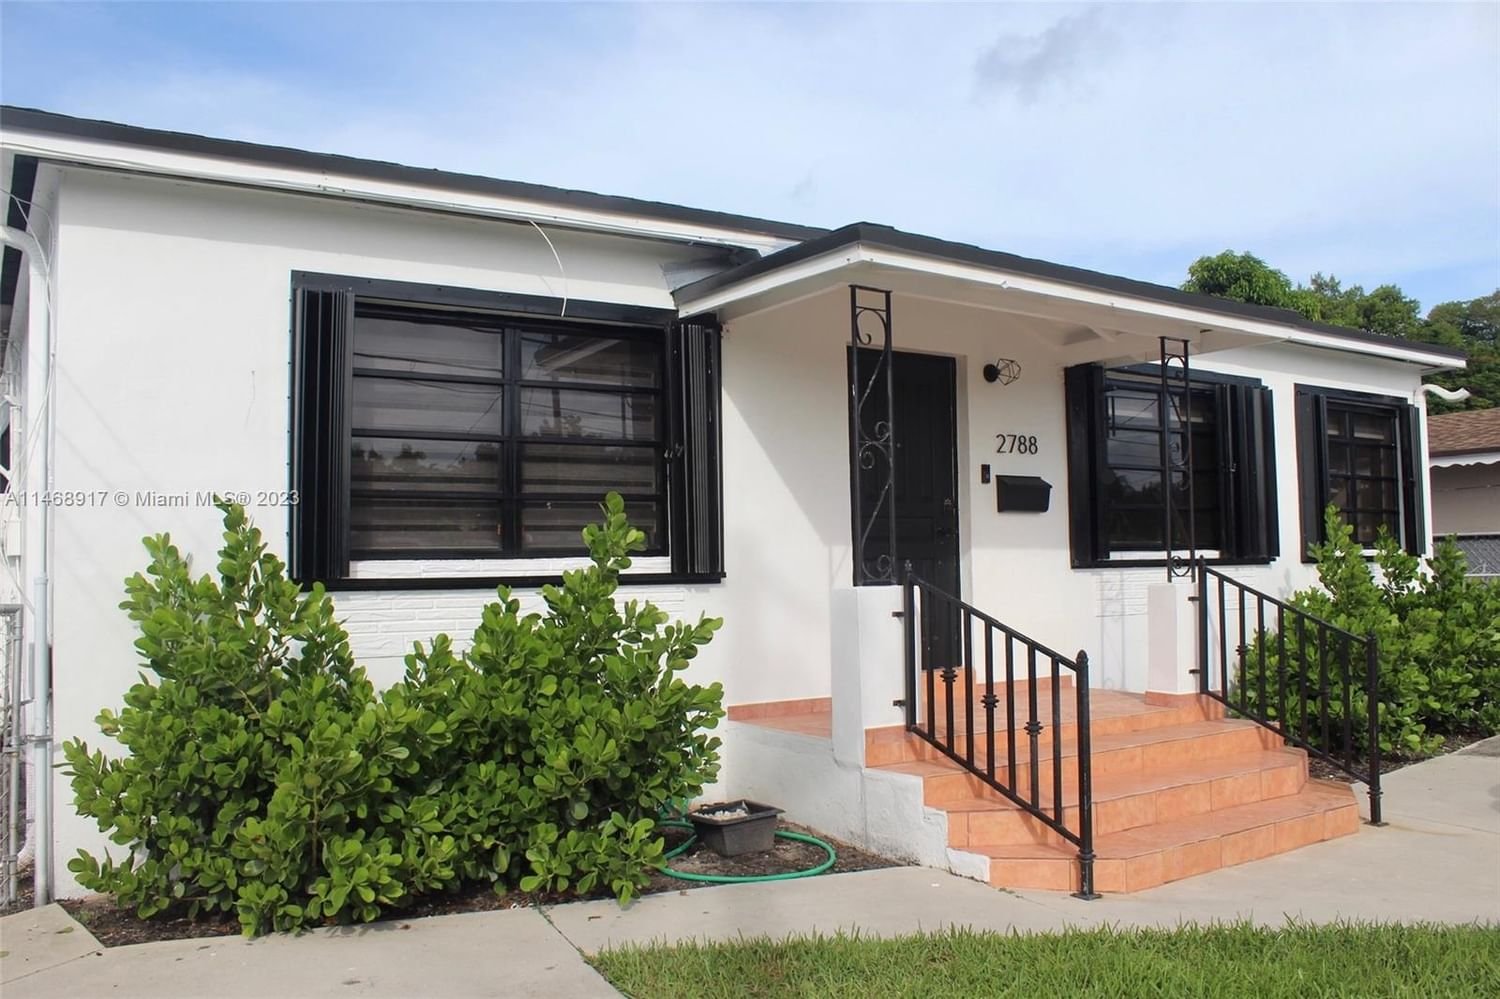 Real estate property located at 2788 33rd Ct, Miami-Dade County, SILVER BLUFF GARDENS, Miami, FL